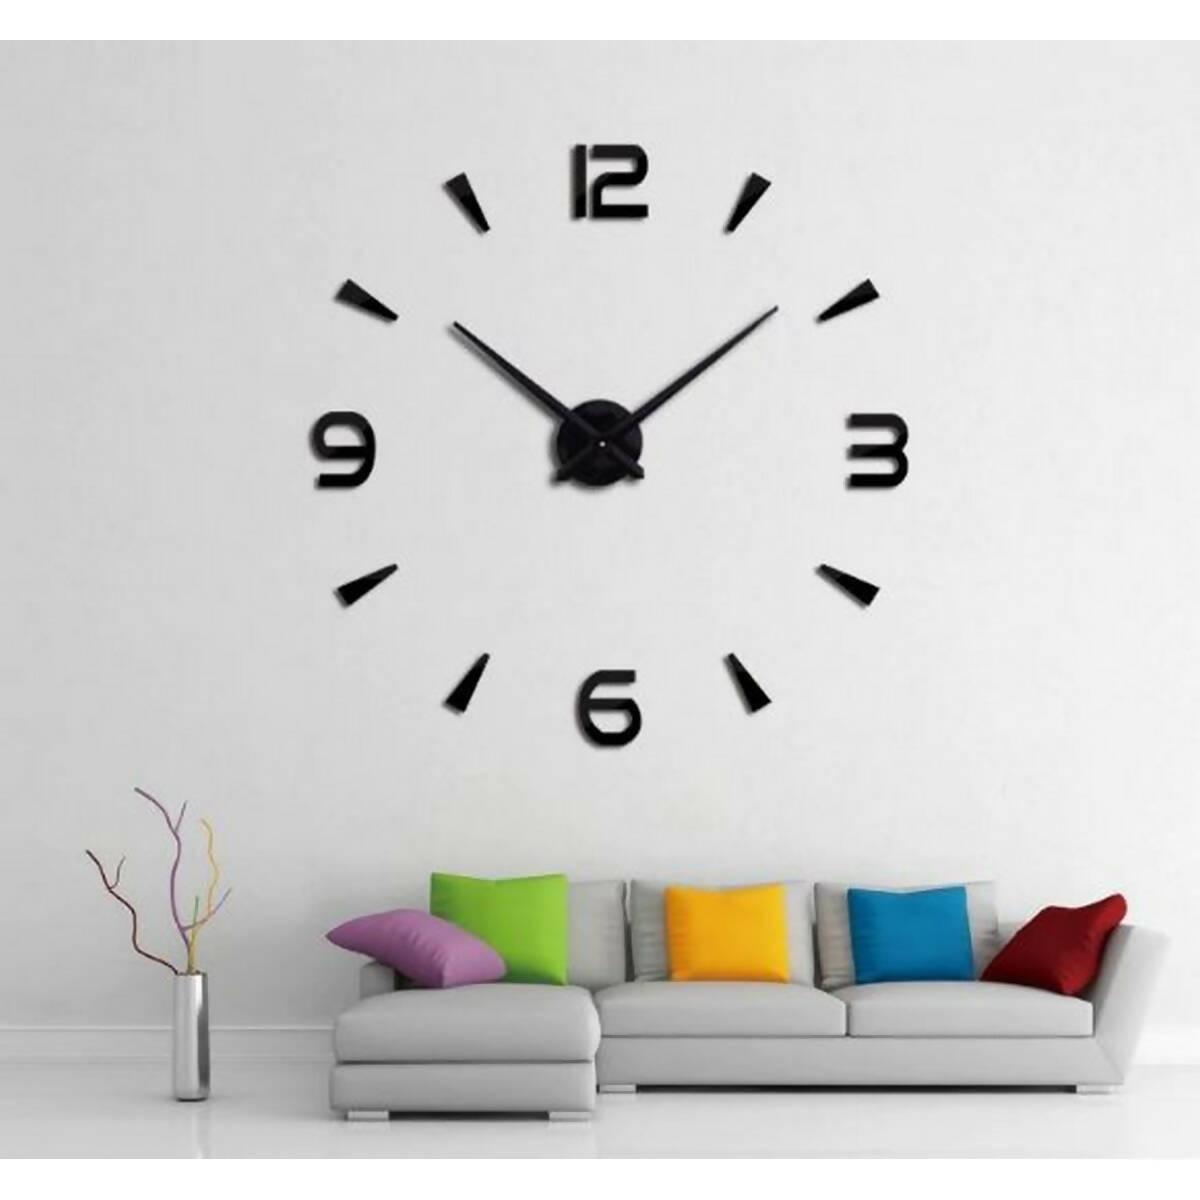 Wooden Large DIY Wall Clock Modern Design 3D Wall Clock - Home Decor - Living Room Wall Clock